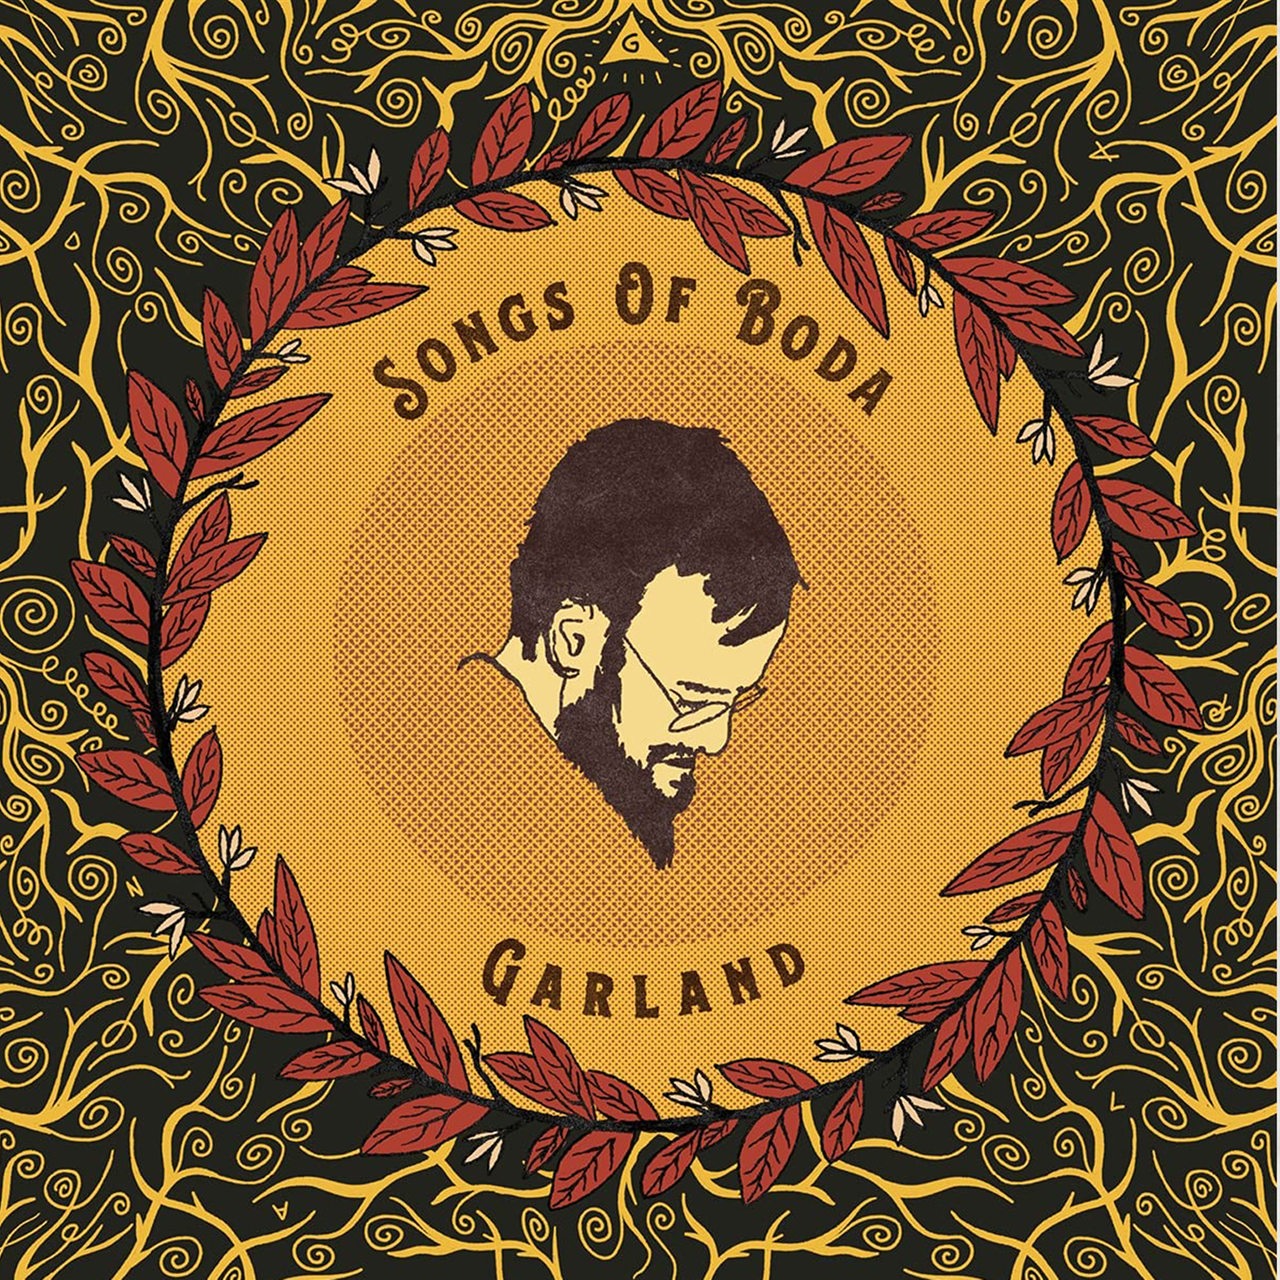 CD Cover von Garland, Songs of Boda